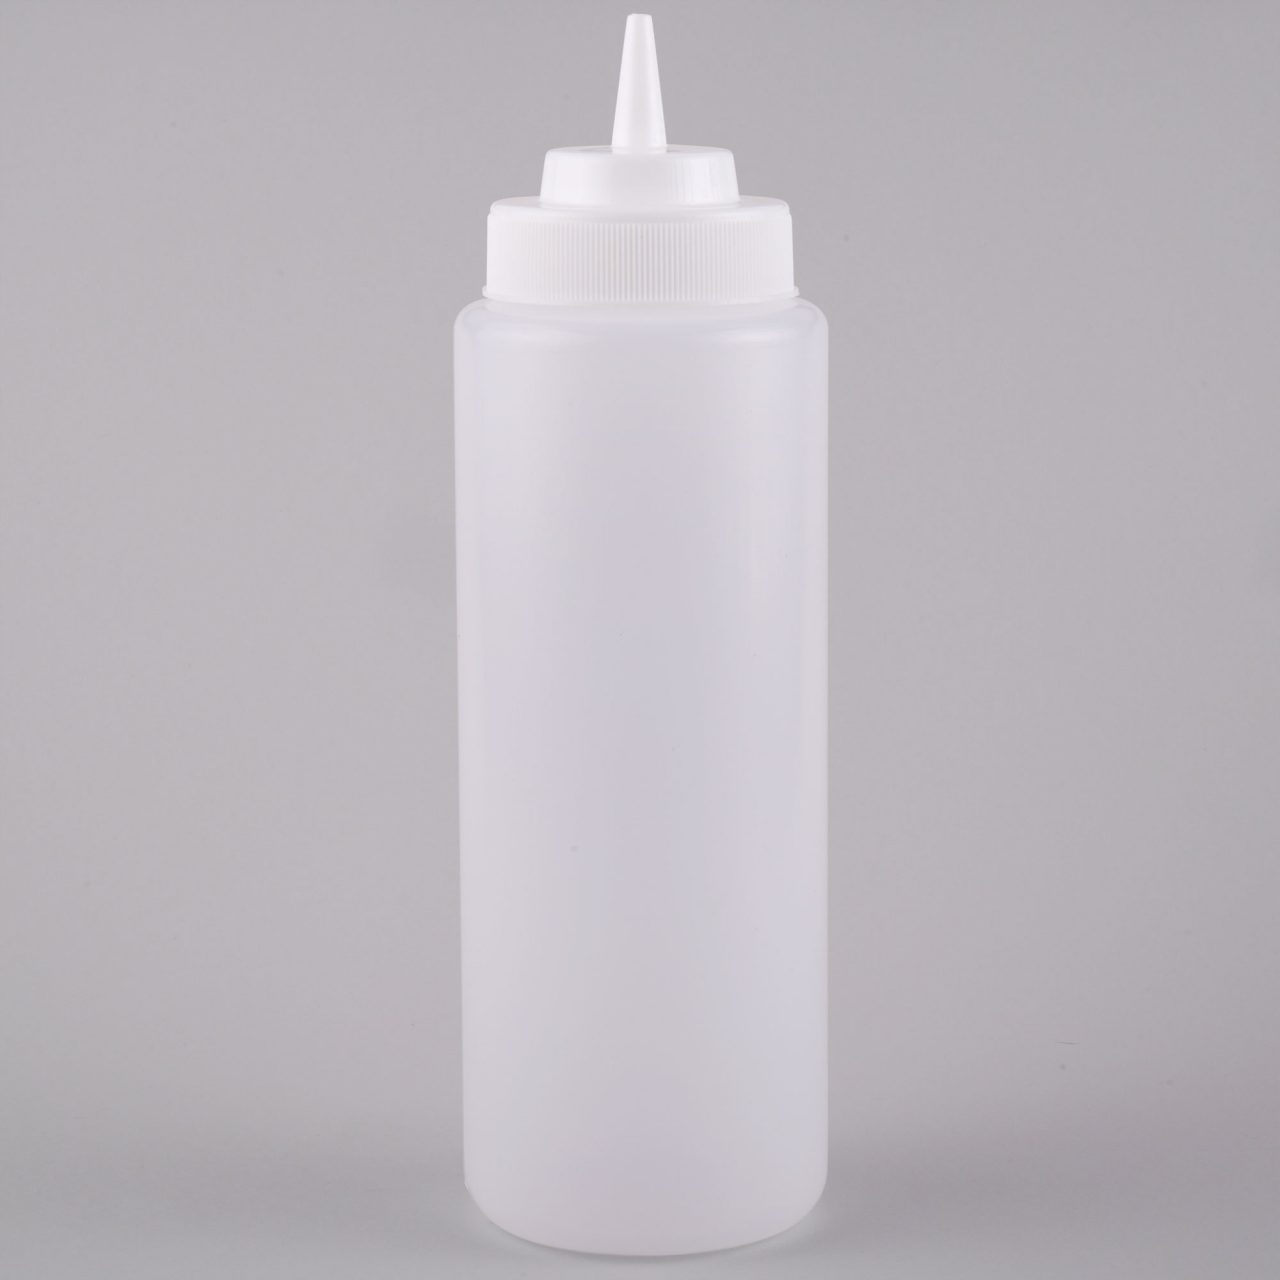 KH Plastic Squeeze Bottle Clear PP Ken Hands Agencies Importer